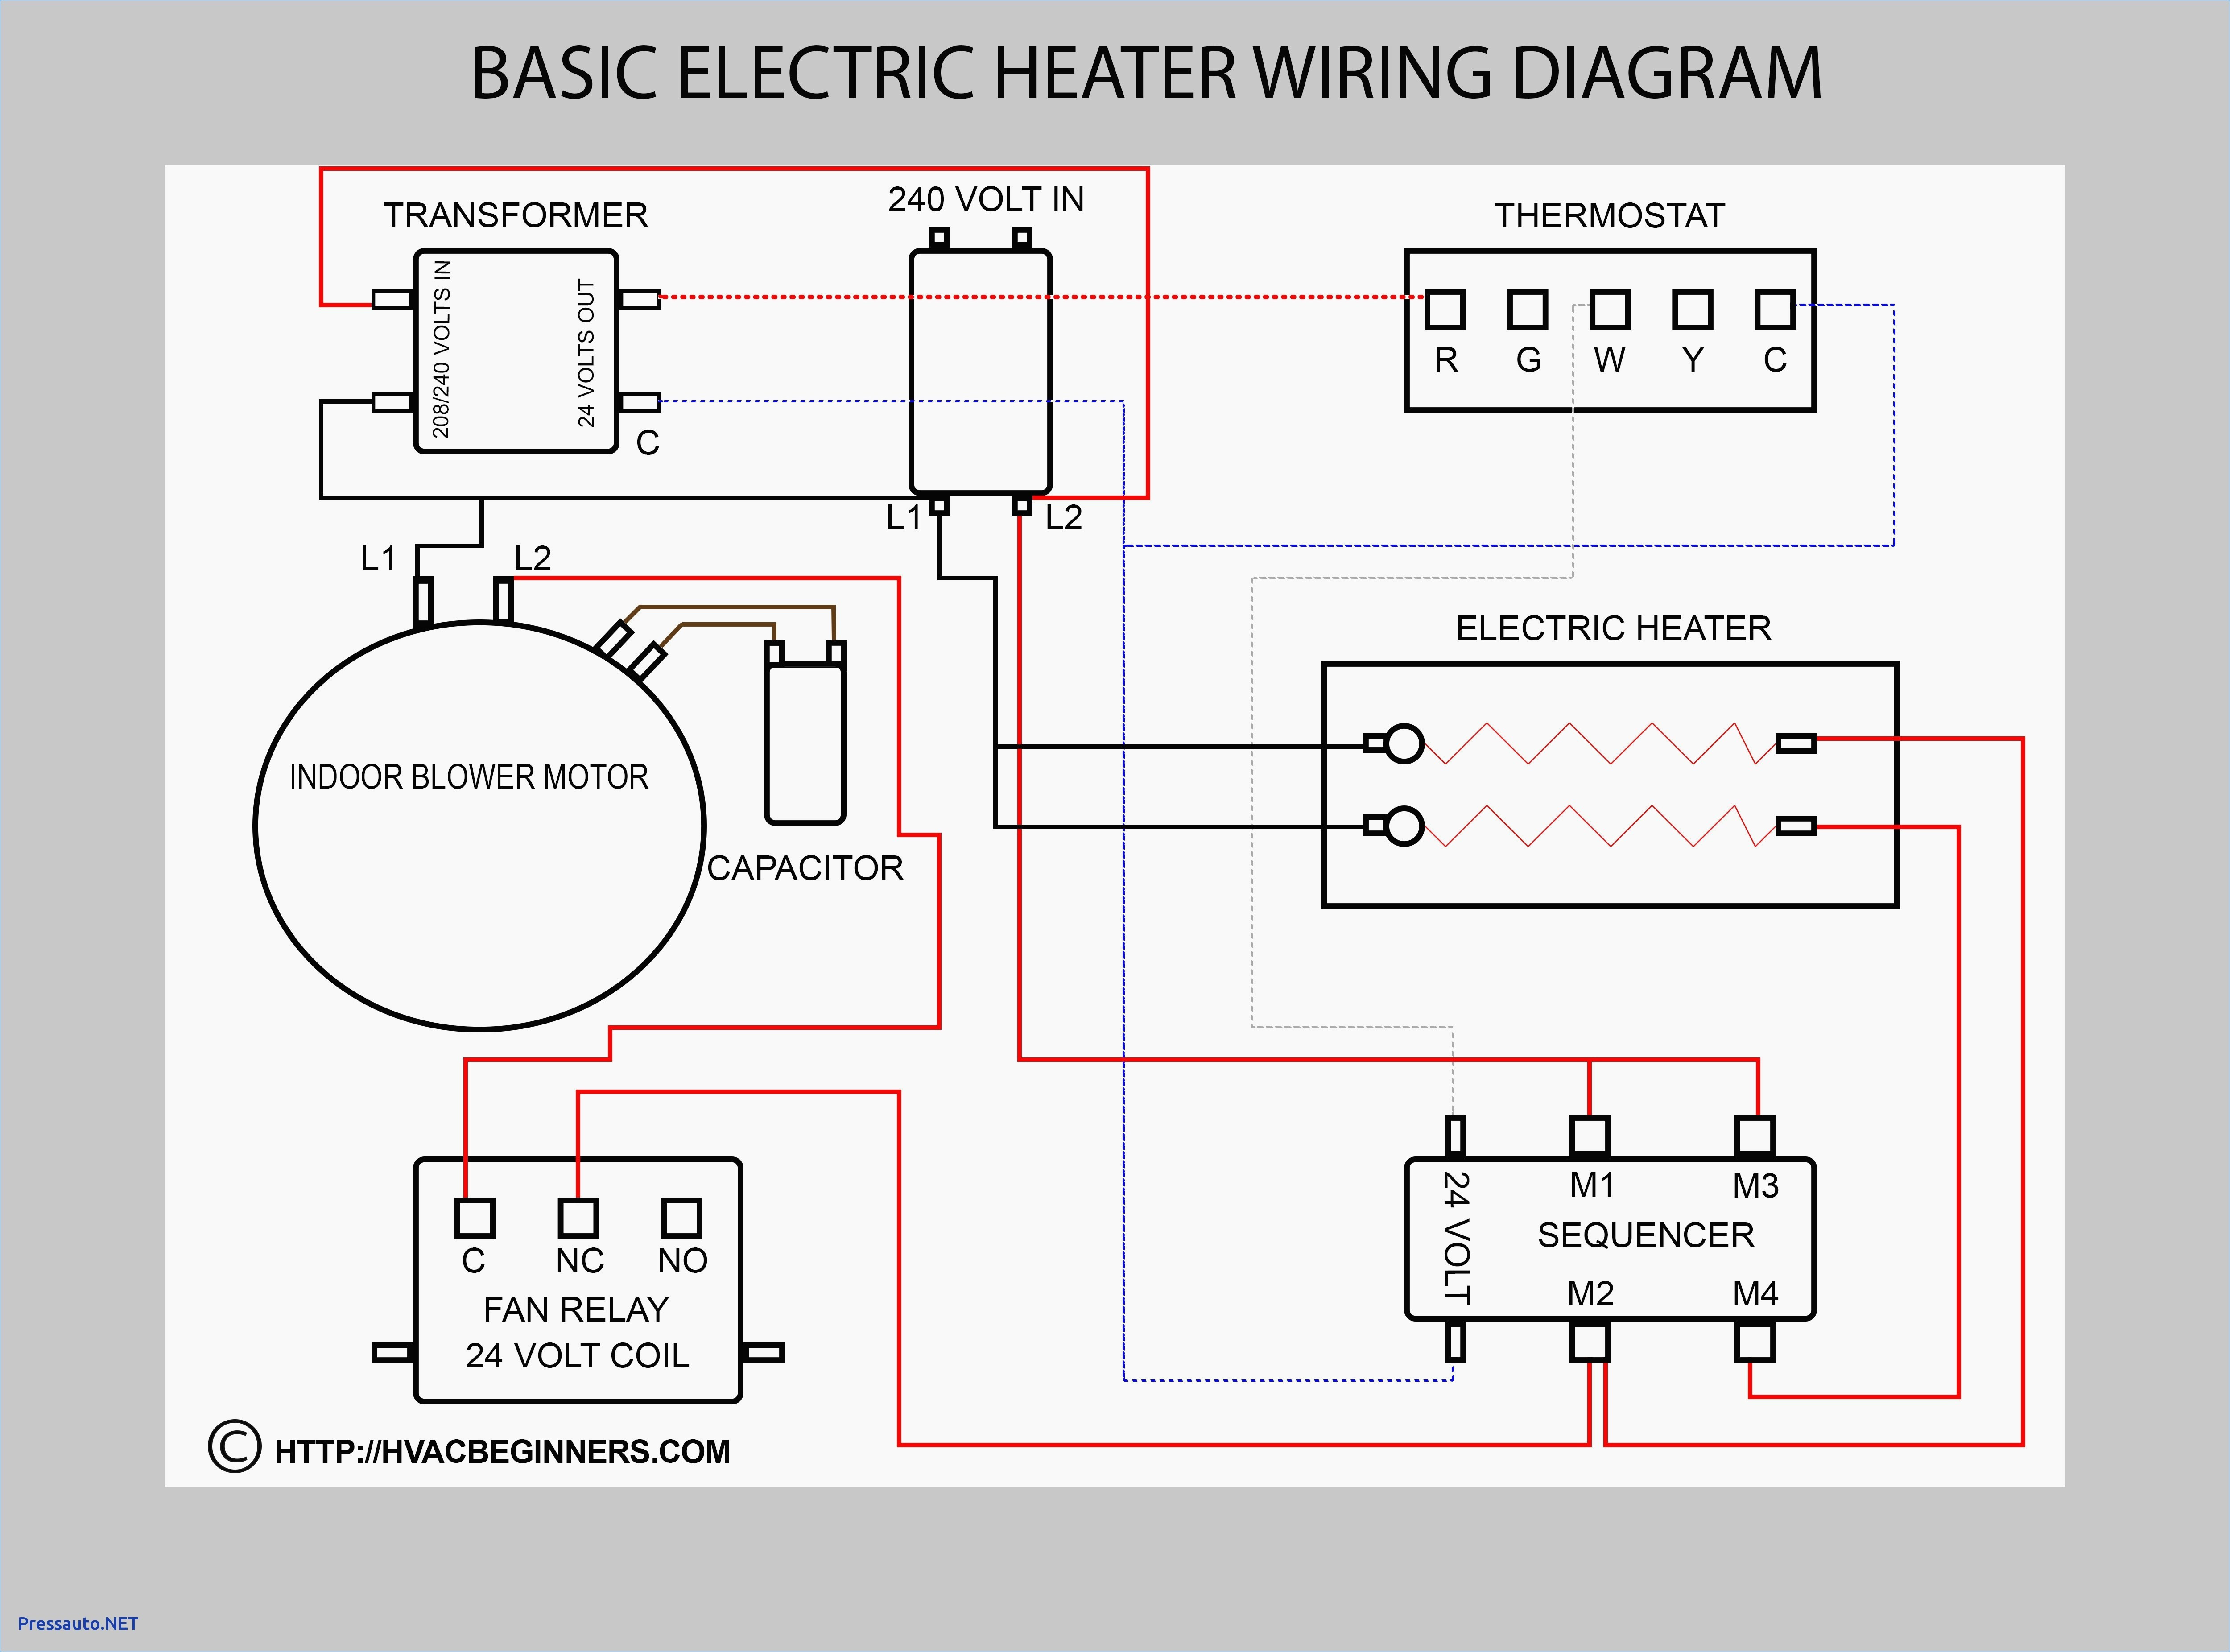 Welding Plug Wiring Diagram - Wiring Diagram Schema - 220V Welder Plug Wiring Diagram